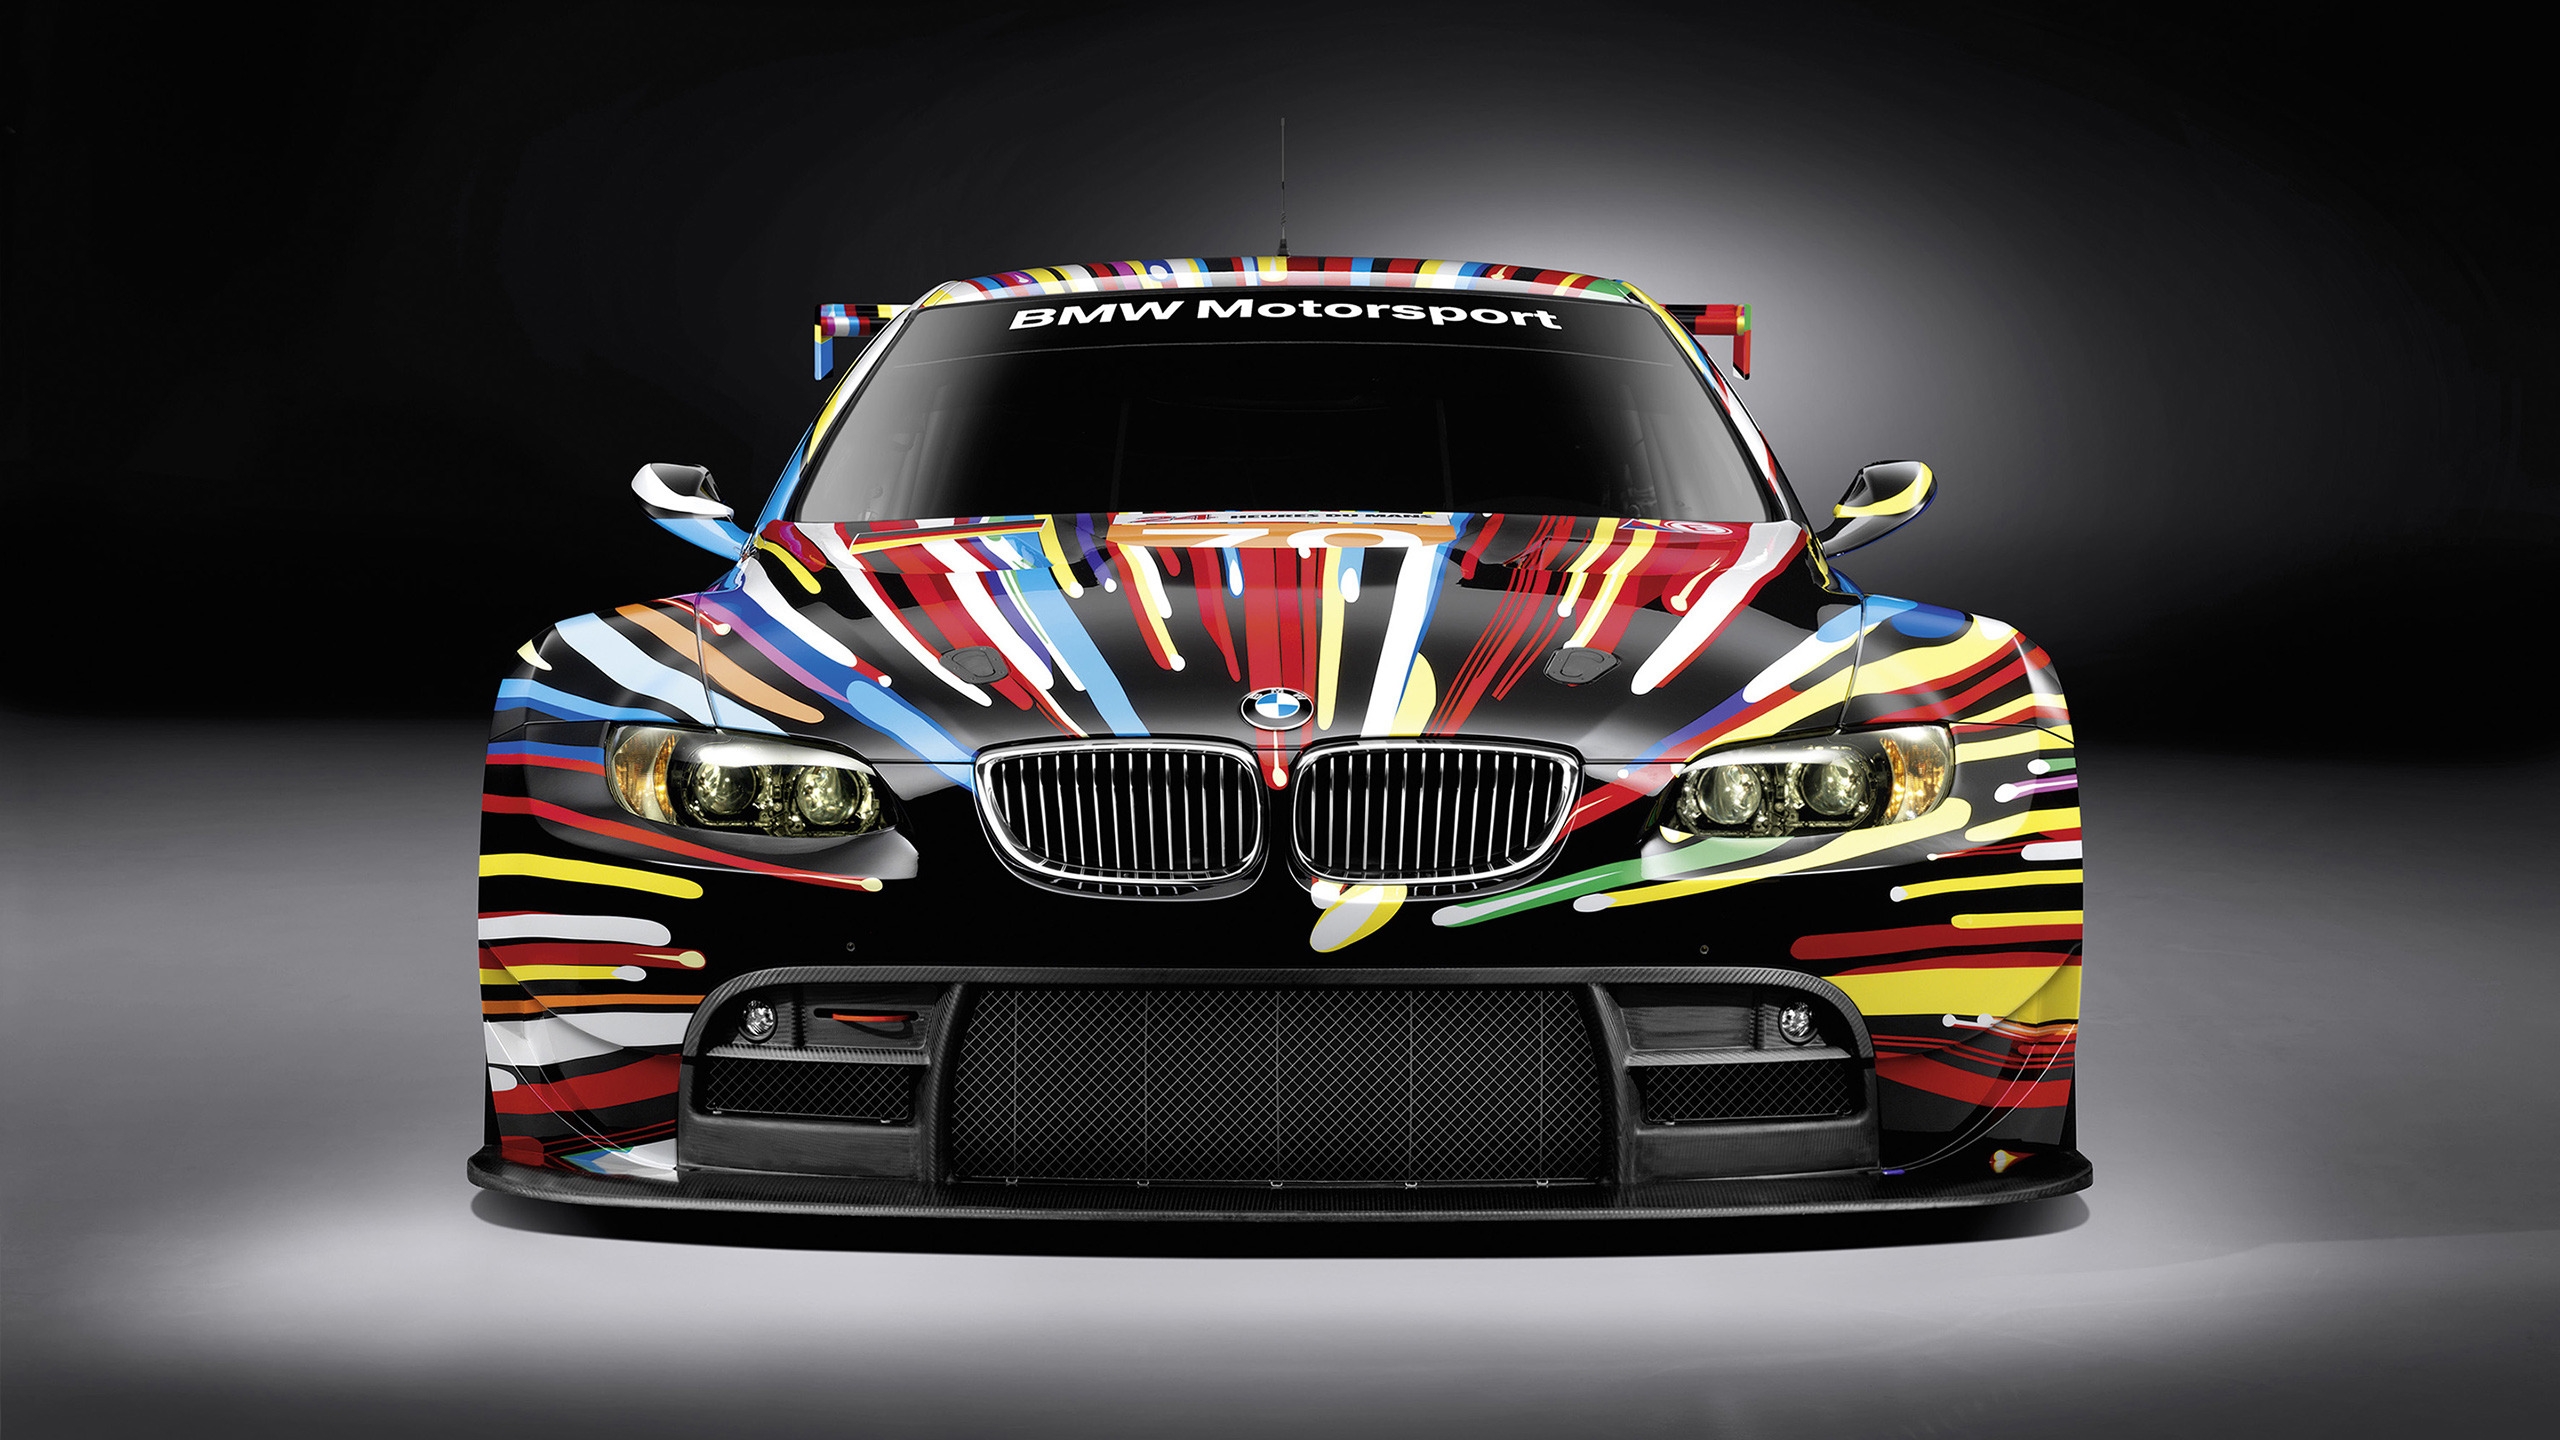 BMW M3 GT 2 Art for 2560x1440 HDTV resolution